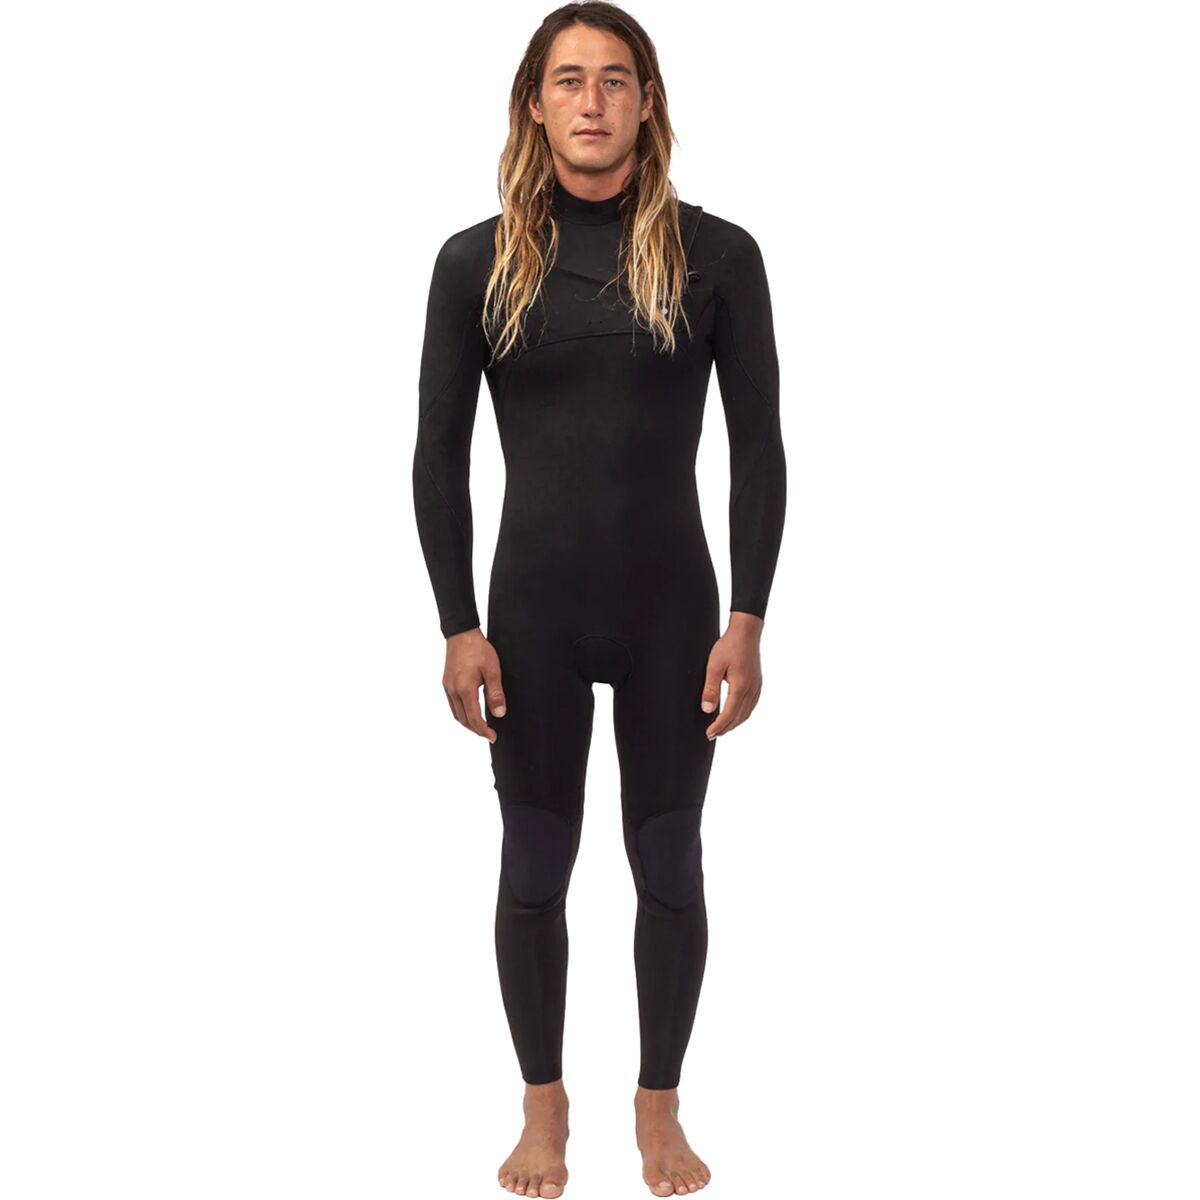 Vissla 7 Seas 4/3 Full Chest Zip Long-Sleeve Wetsuit - Men's